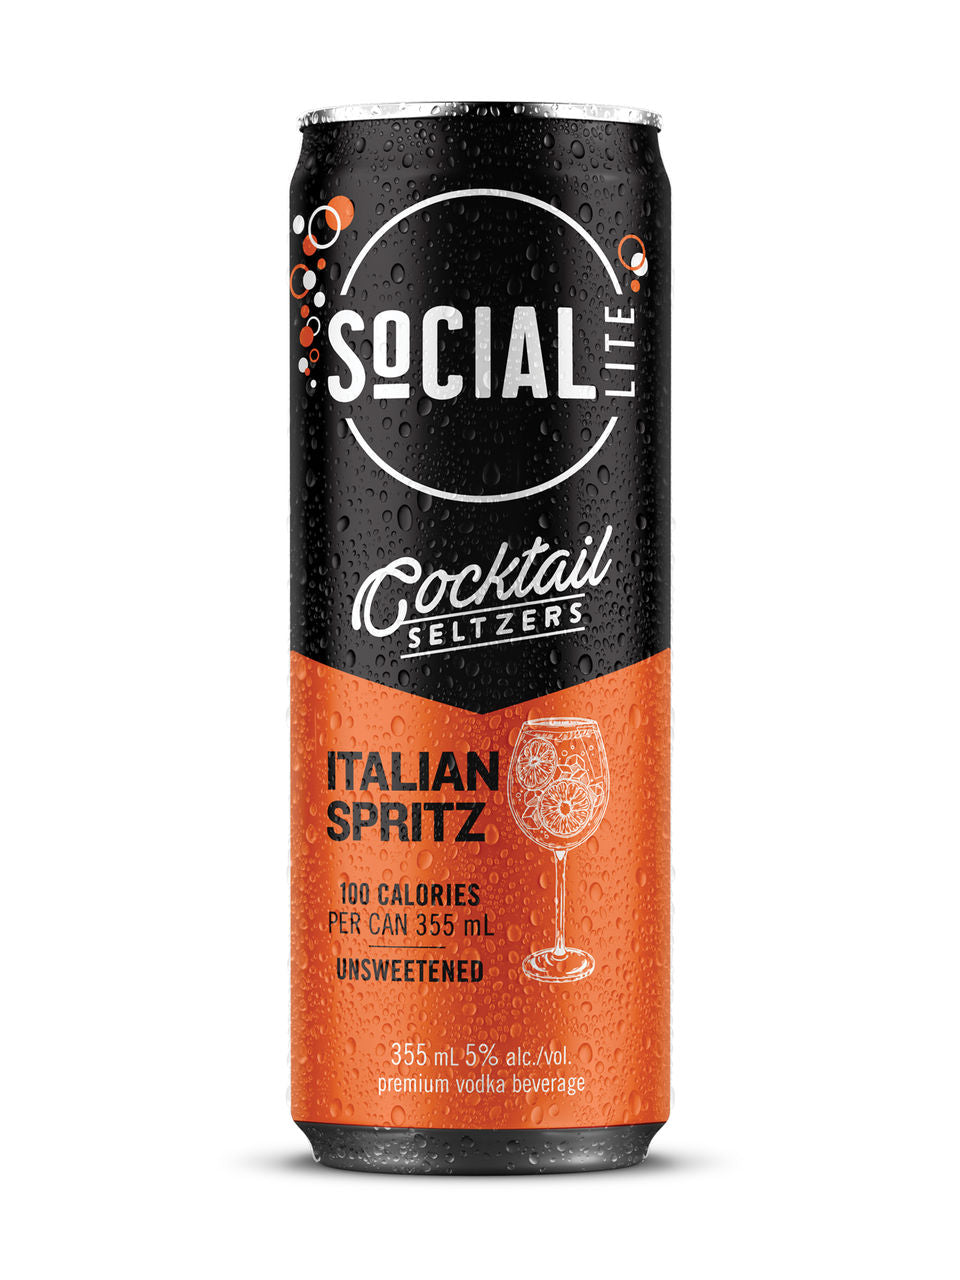 Social Lite Italian Spritz Cocktail Seltzer 355 ml can